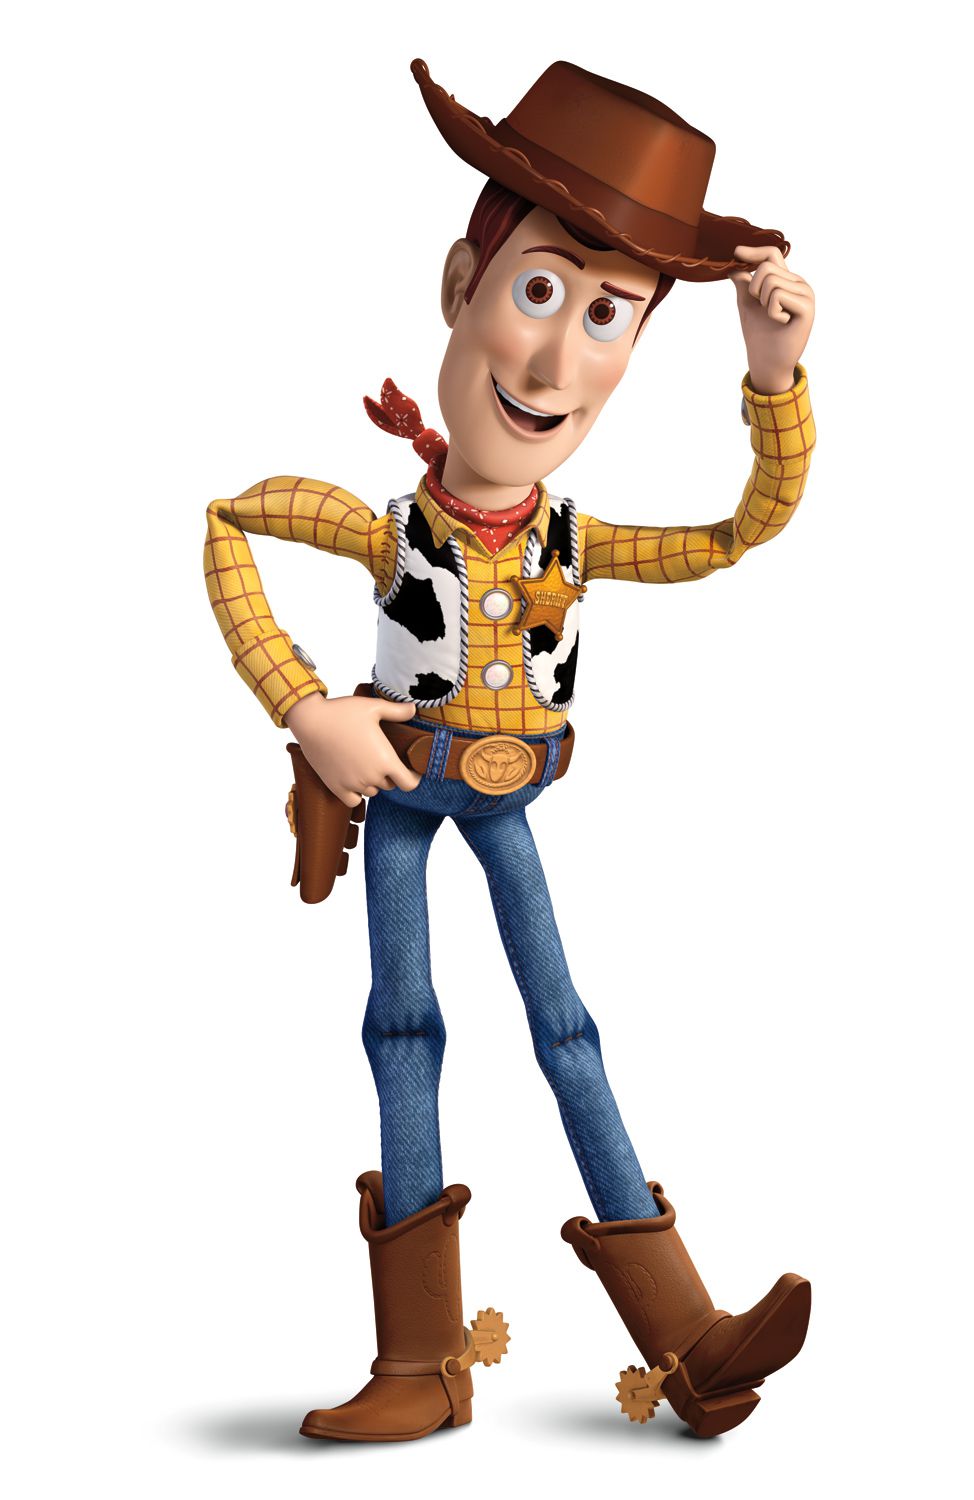 Toy Story 4: Woody & Bo Peep love story 